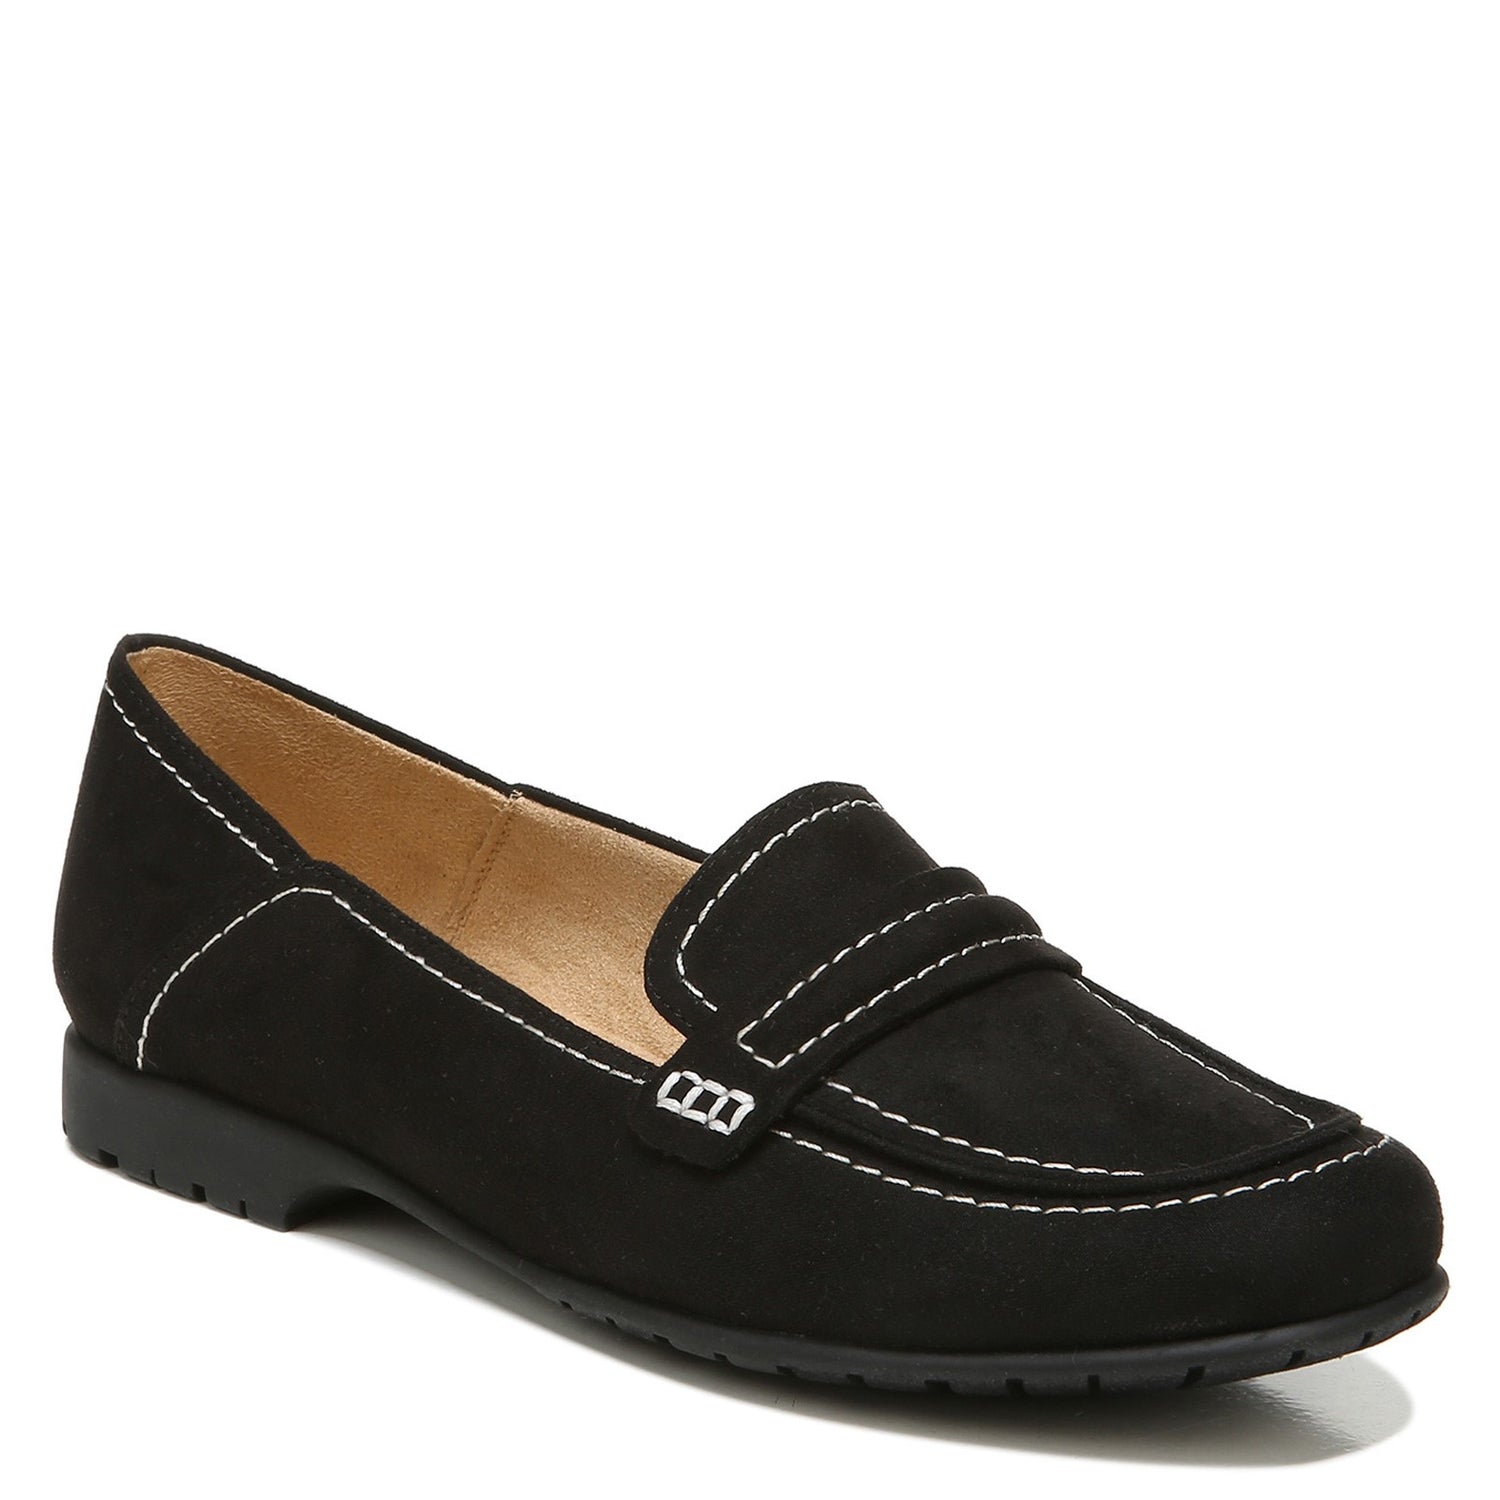 Peltz Shoes  Women's Naturalizer Dannah Slip-On BLACK FABRIC H7210F1003